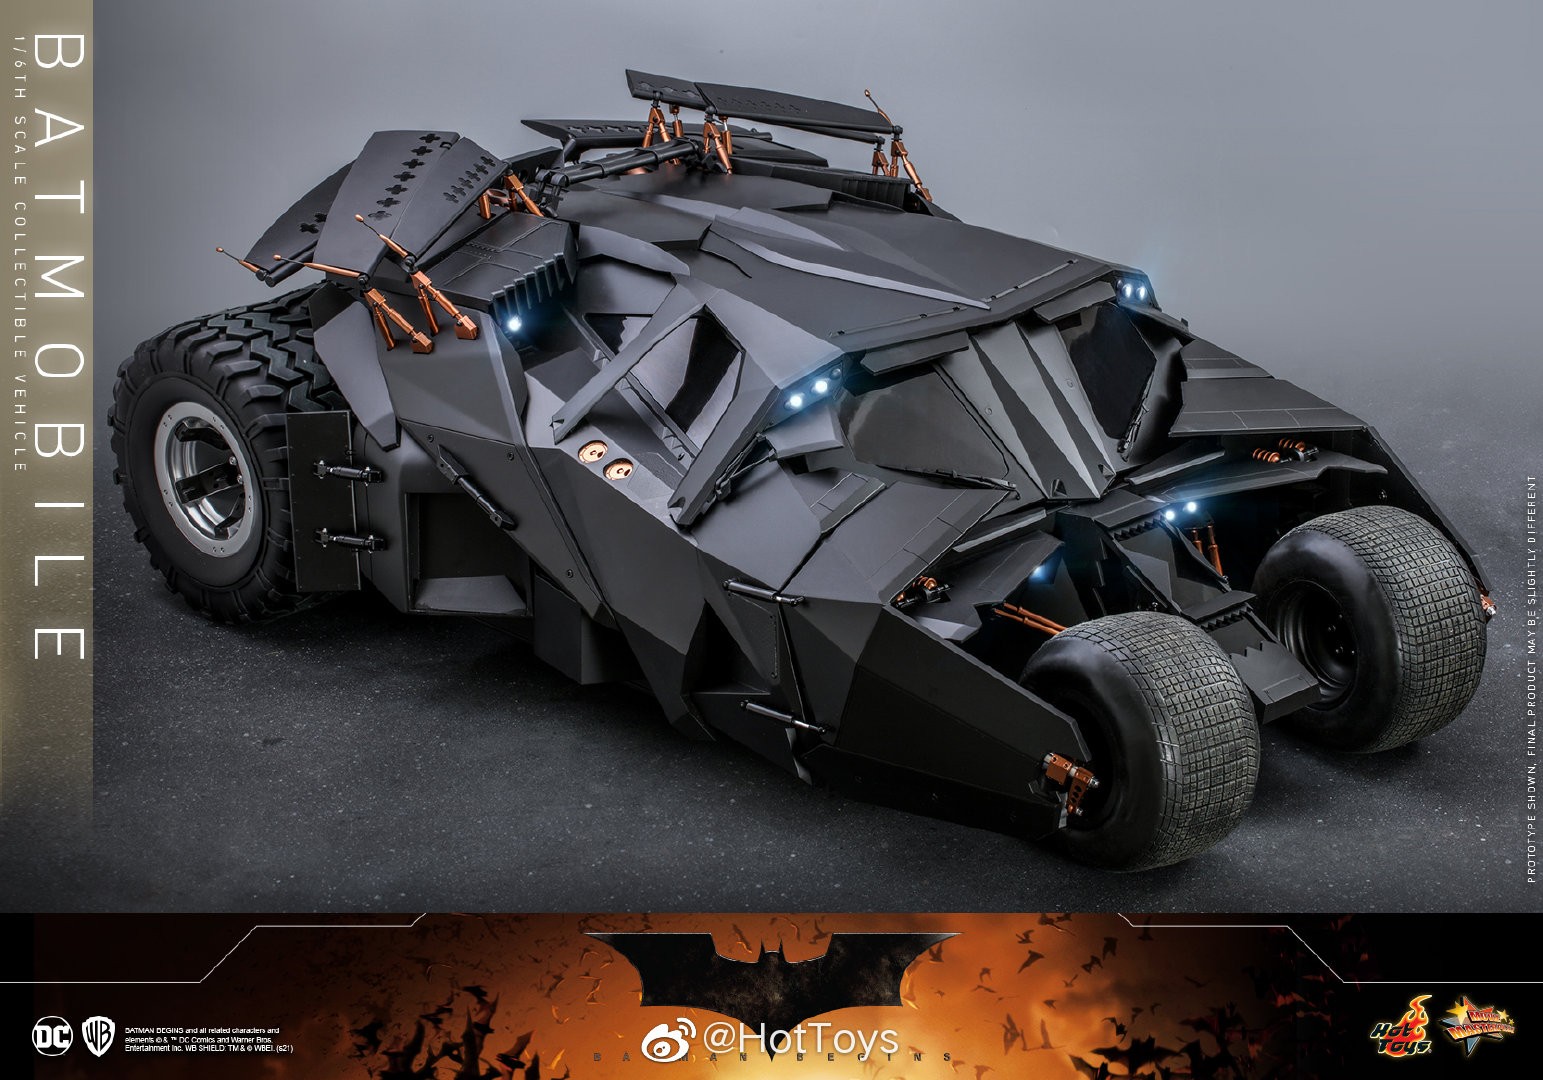 Hottoys诺兰版蝙蝠车1/6模型 售价3980元